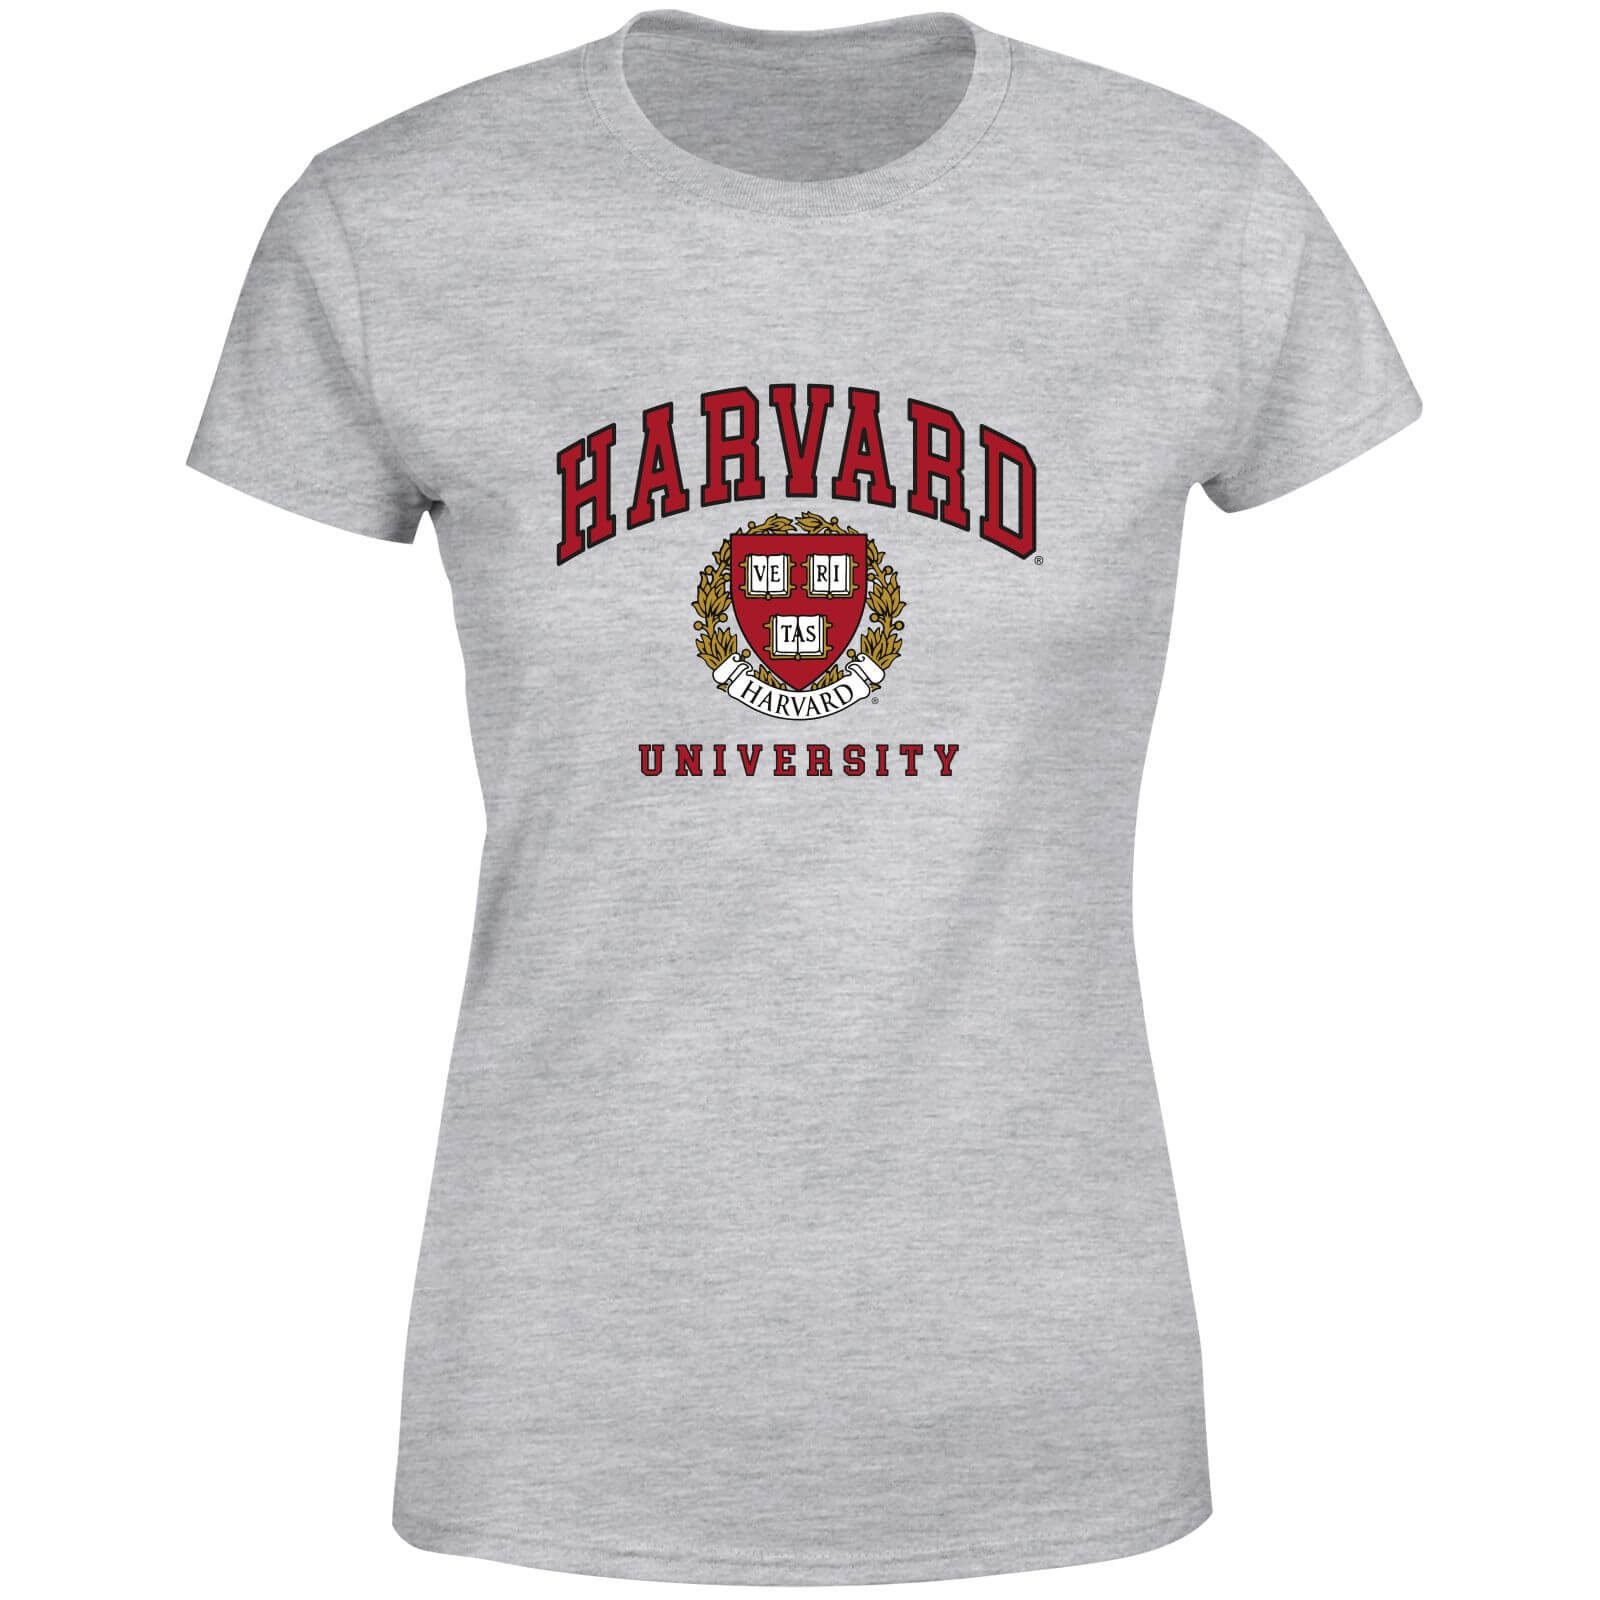 Harvard Gray Tee Women's T-Shirt - Grey - XS